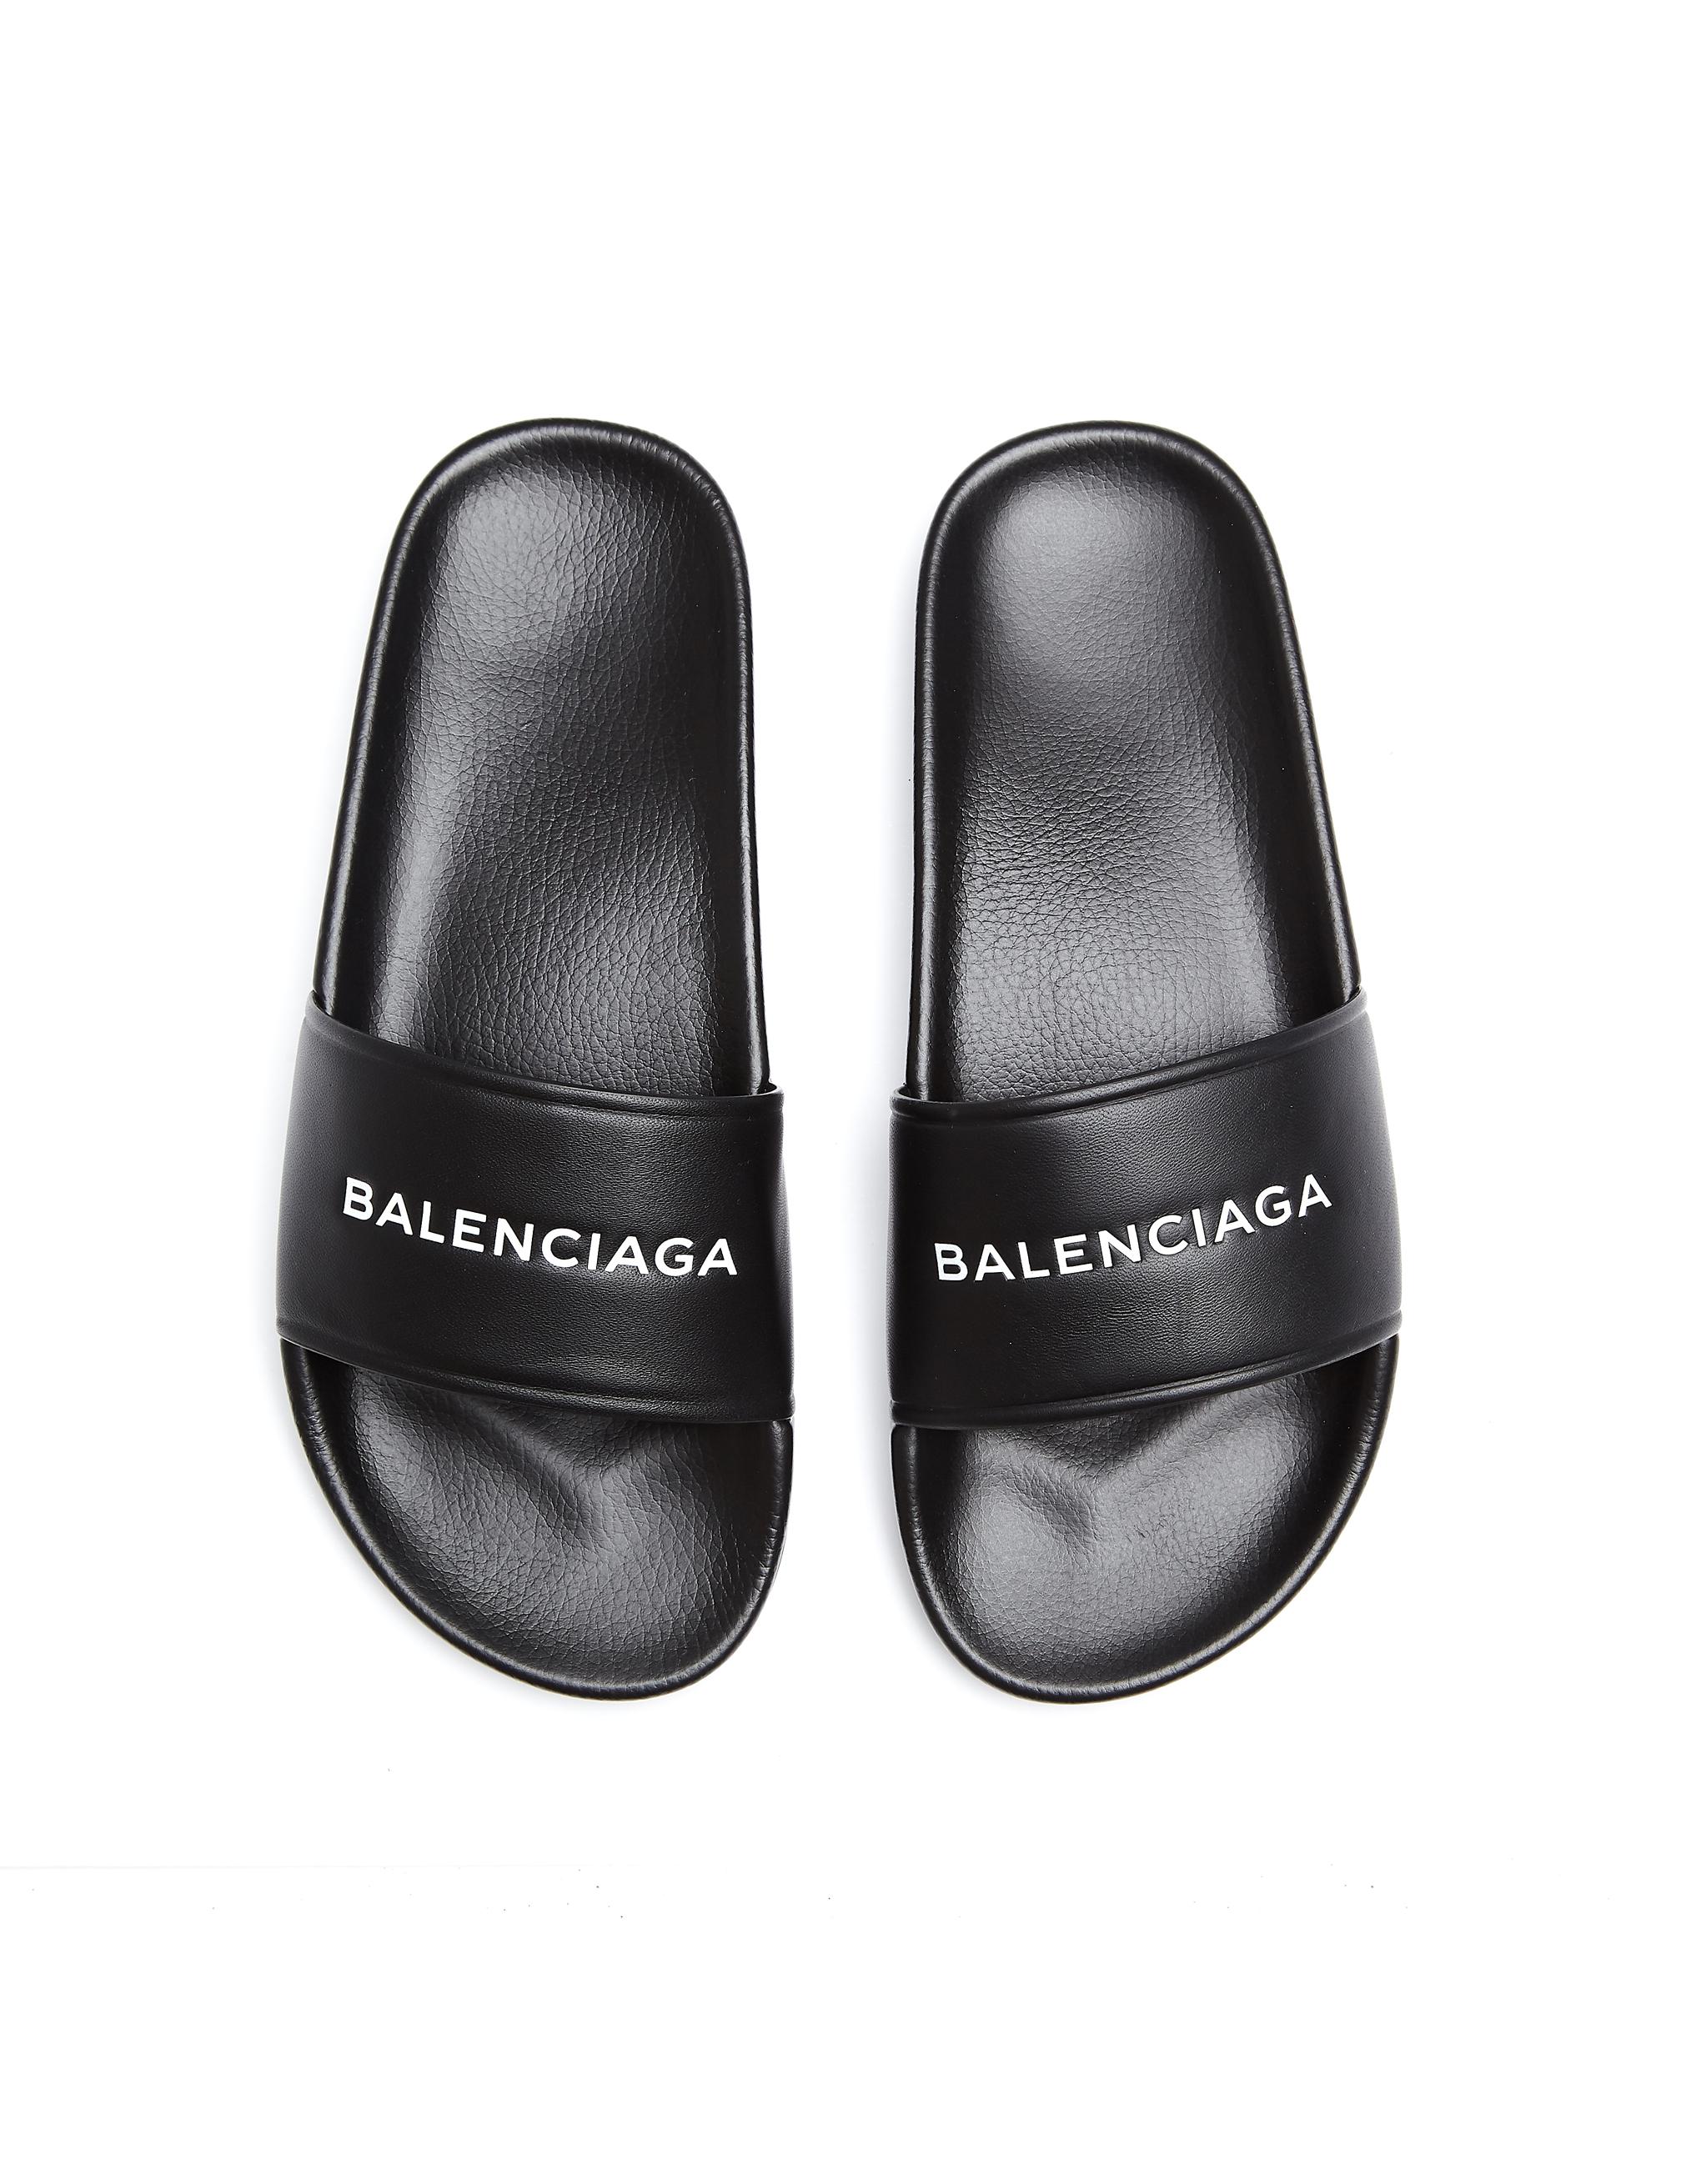 Balenciaga Piscine Black Leather Slides for Men - Lyst